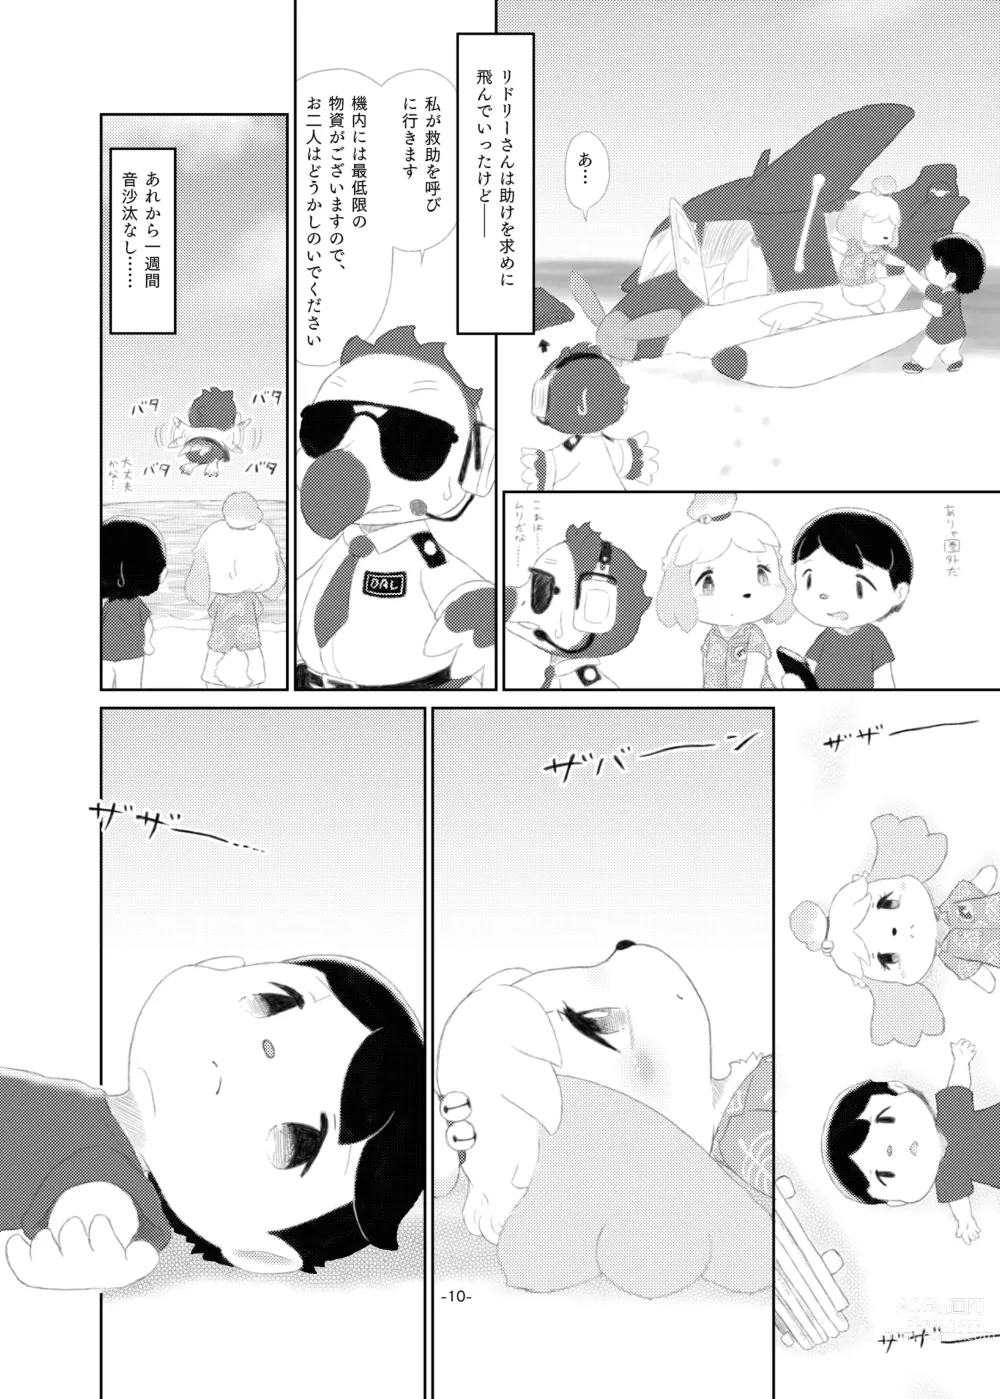 Page 9 of doujinshi semi colon